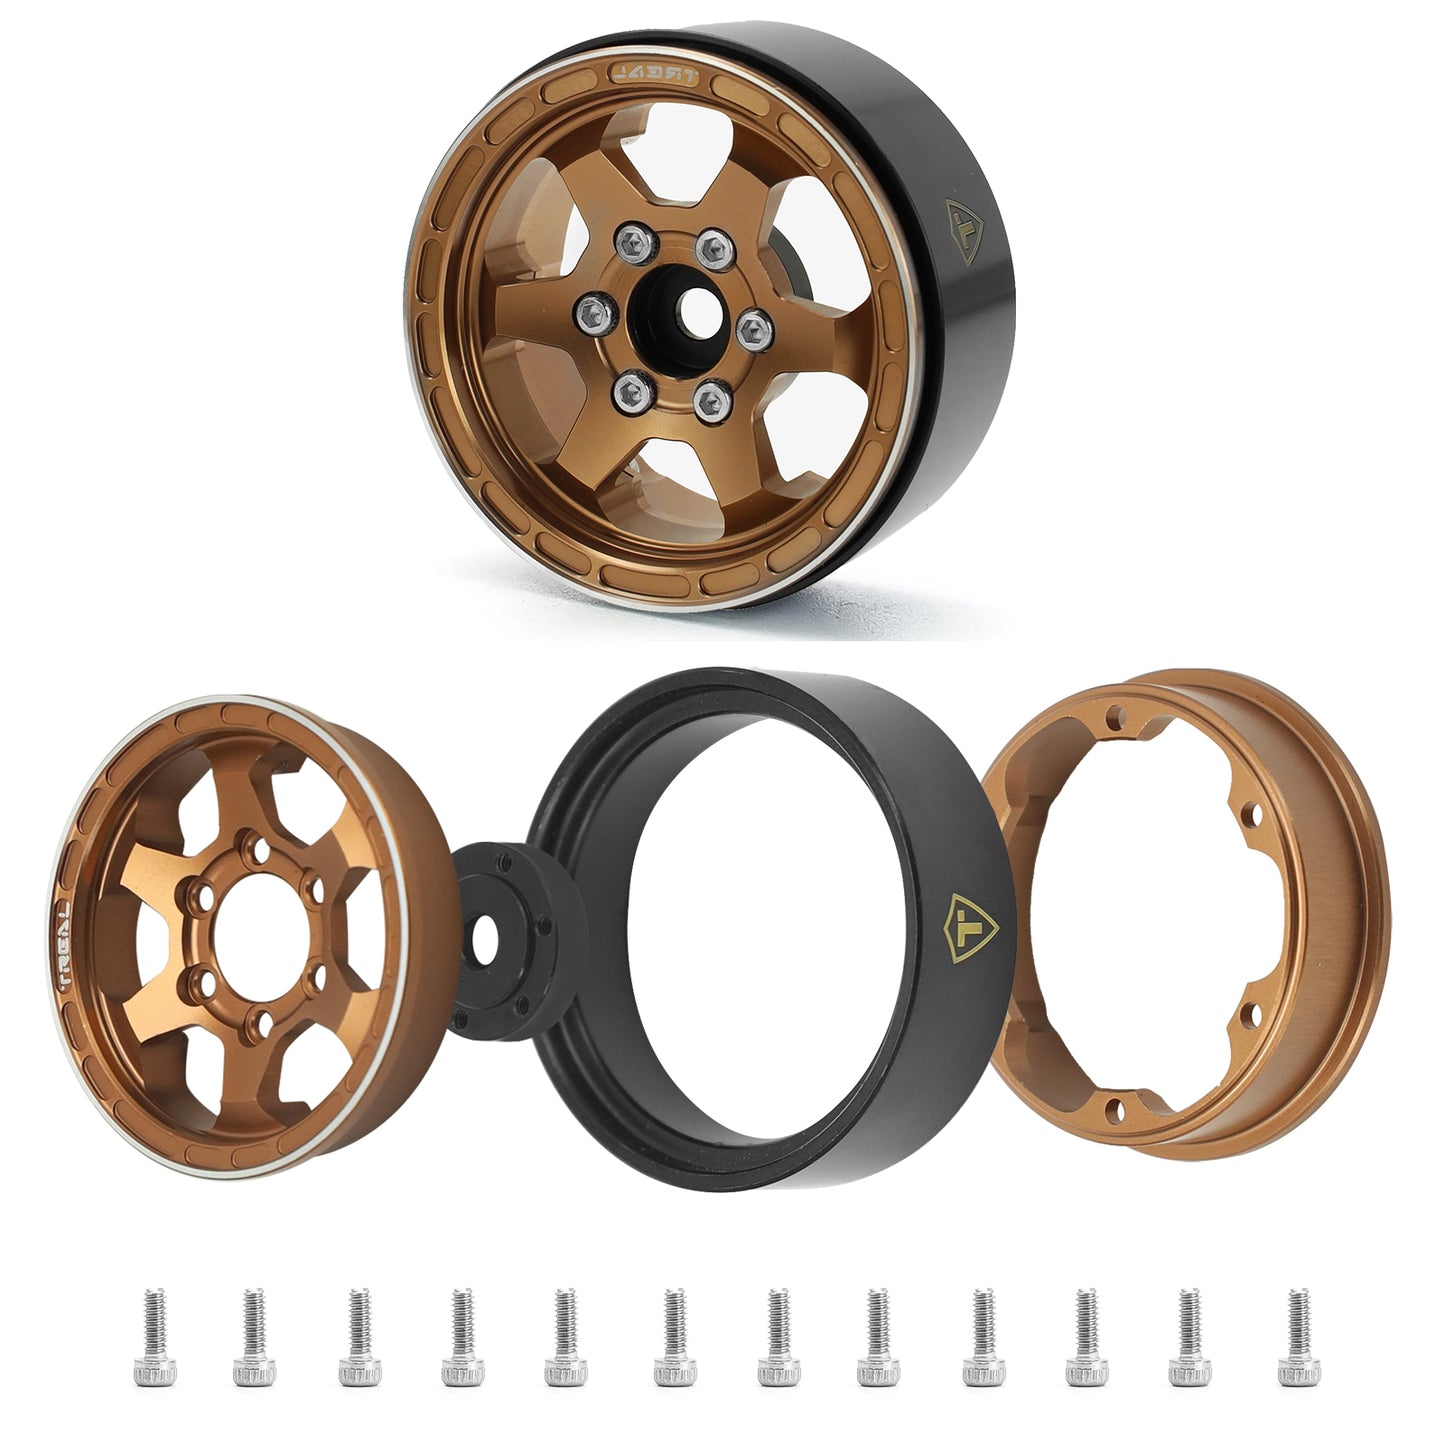 TREAL SCX24 Wheels 1.0" Beadlock Wheels (4P) Scale-Look Concave Six Spoke Rim Crawler Wheels for Axial SCX24 -Type D